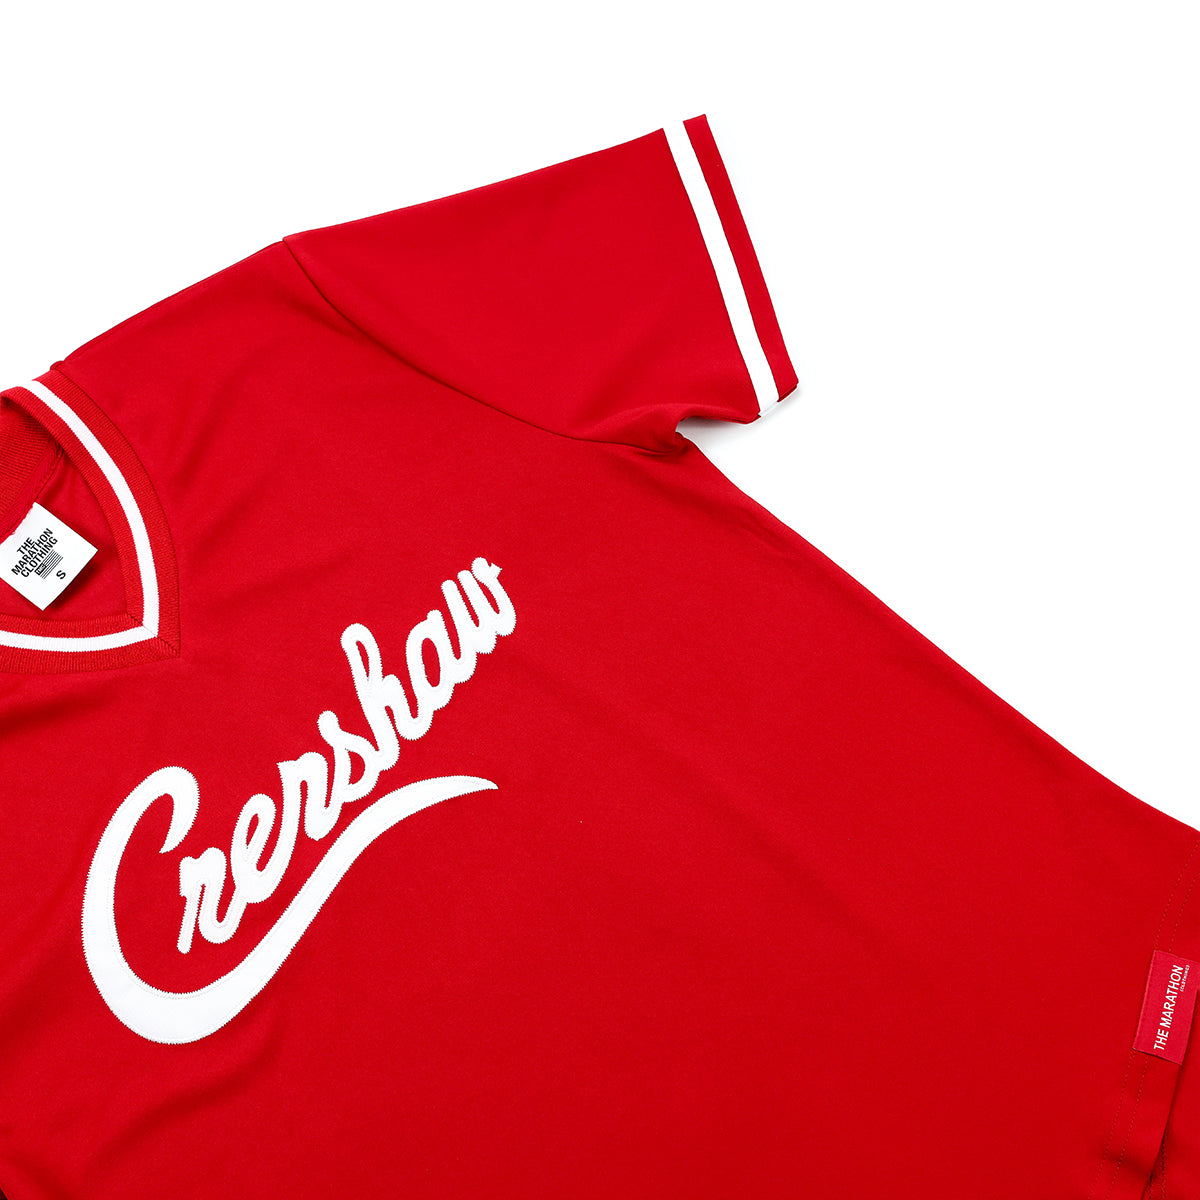 Crenshaw Baseball Warm Up - Green/Red – The Marathon Clothing